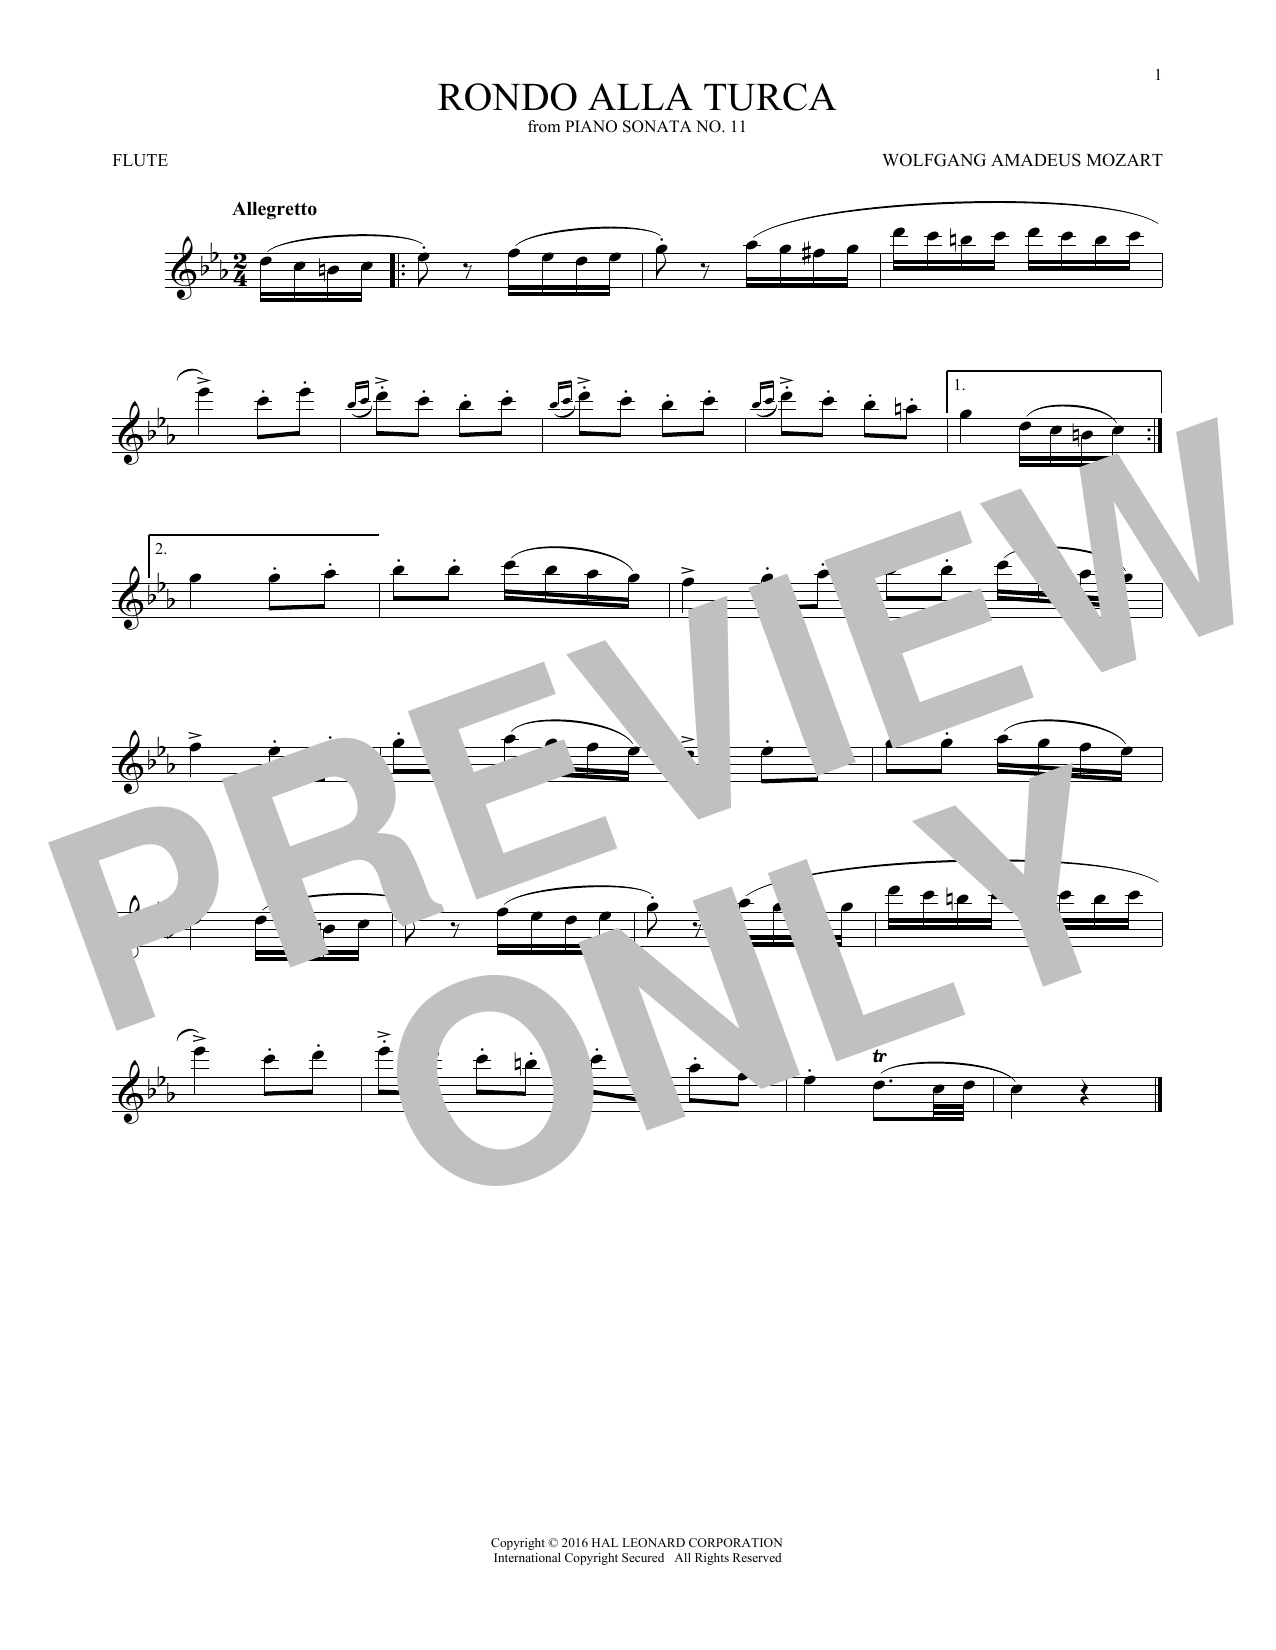 Wolfgang Amadeus Mozart Rondo Alla Turca Sheet Music Notes & Chords for Viola - Download or Print PDF